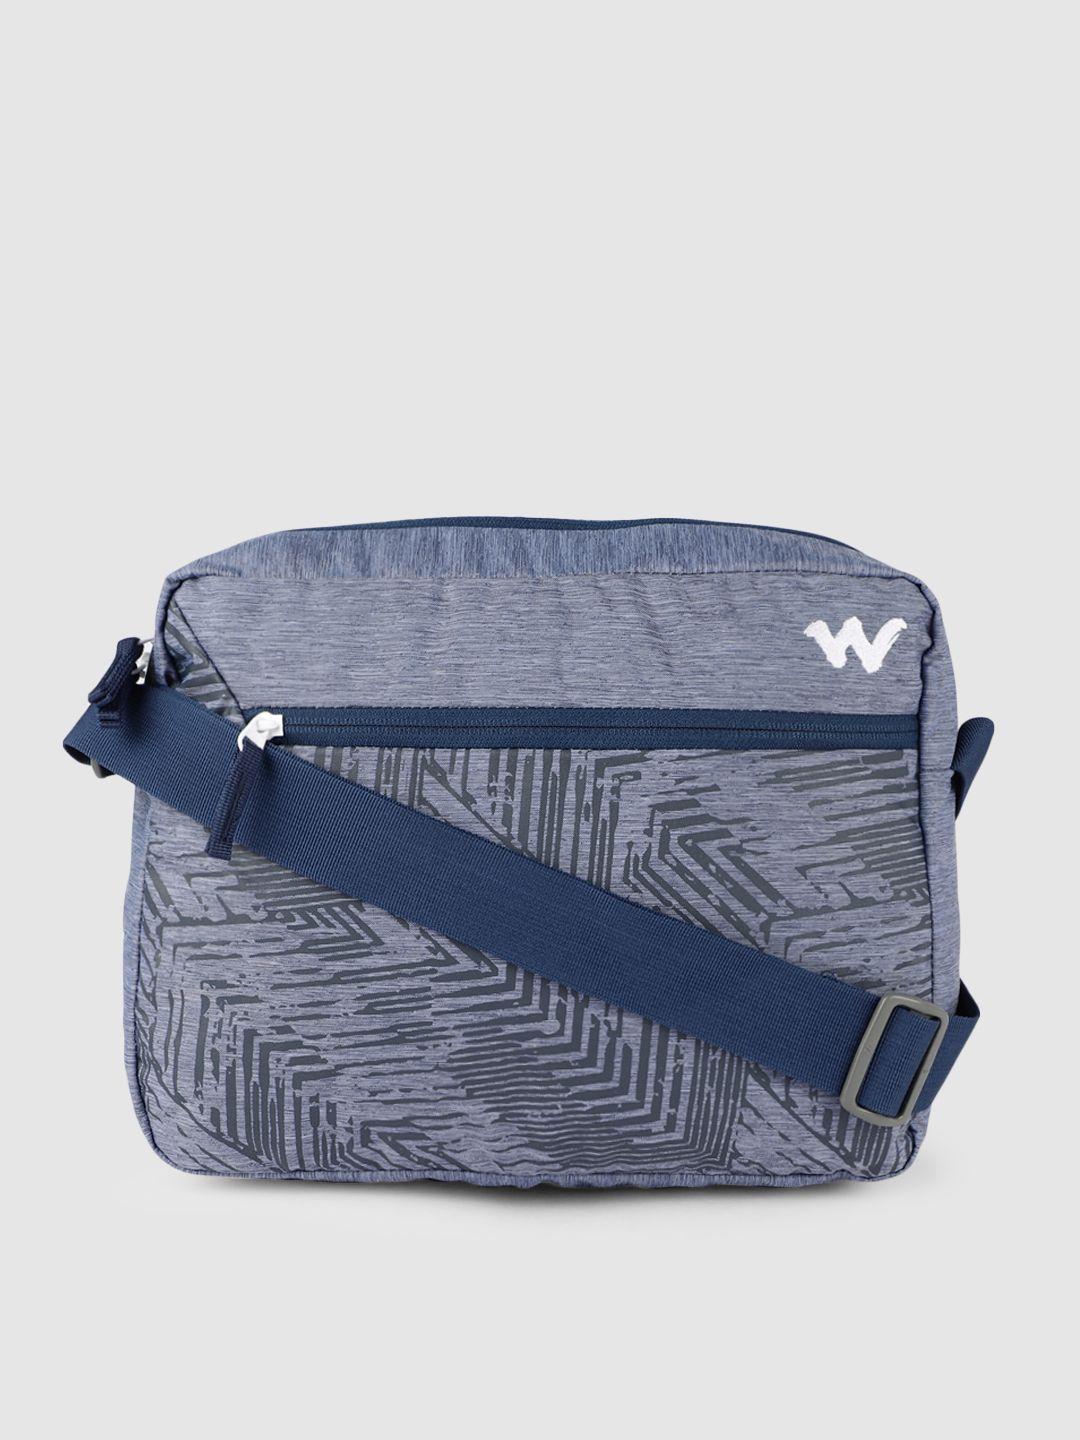 wildcraft unisex blue printed messenger bag